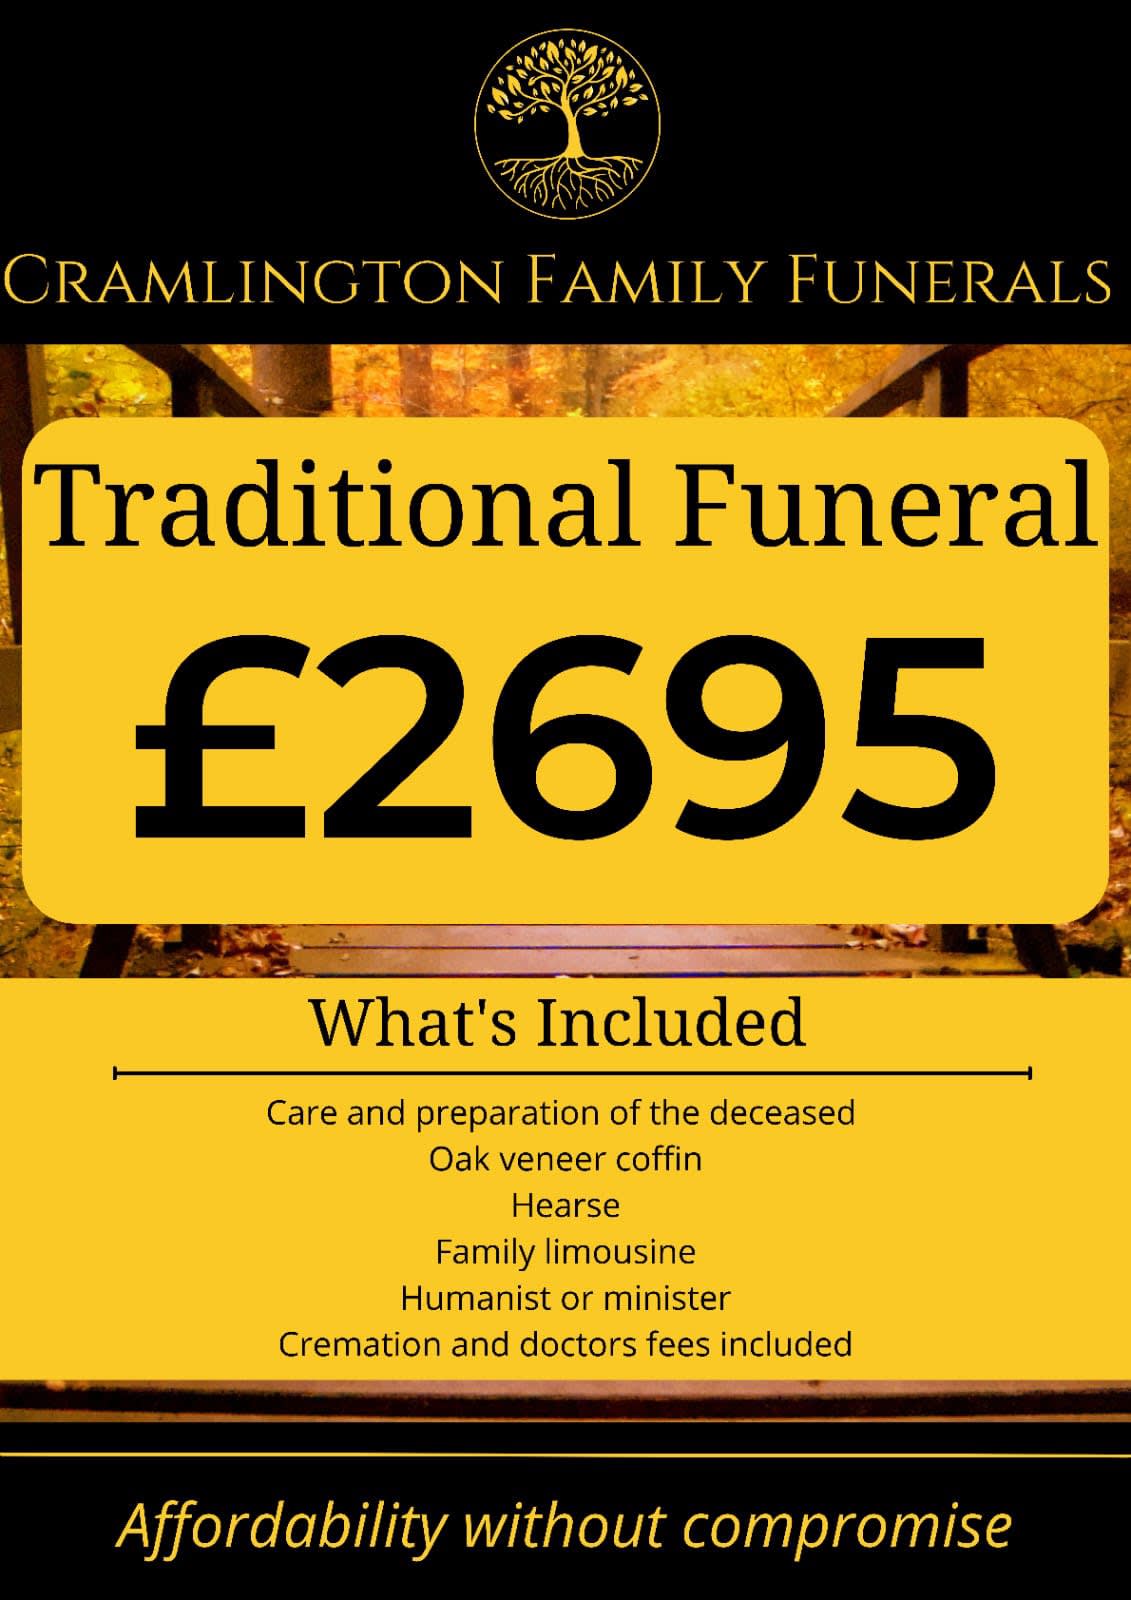 Cramlington Family Funerals Ltd Cramlington 01670 343329